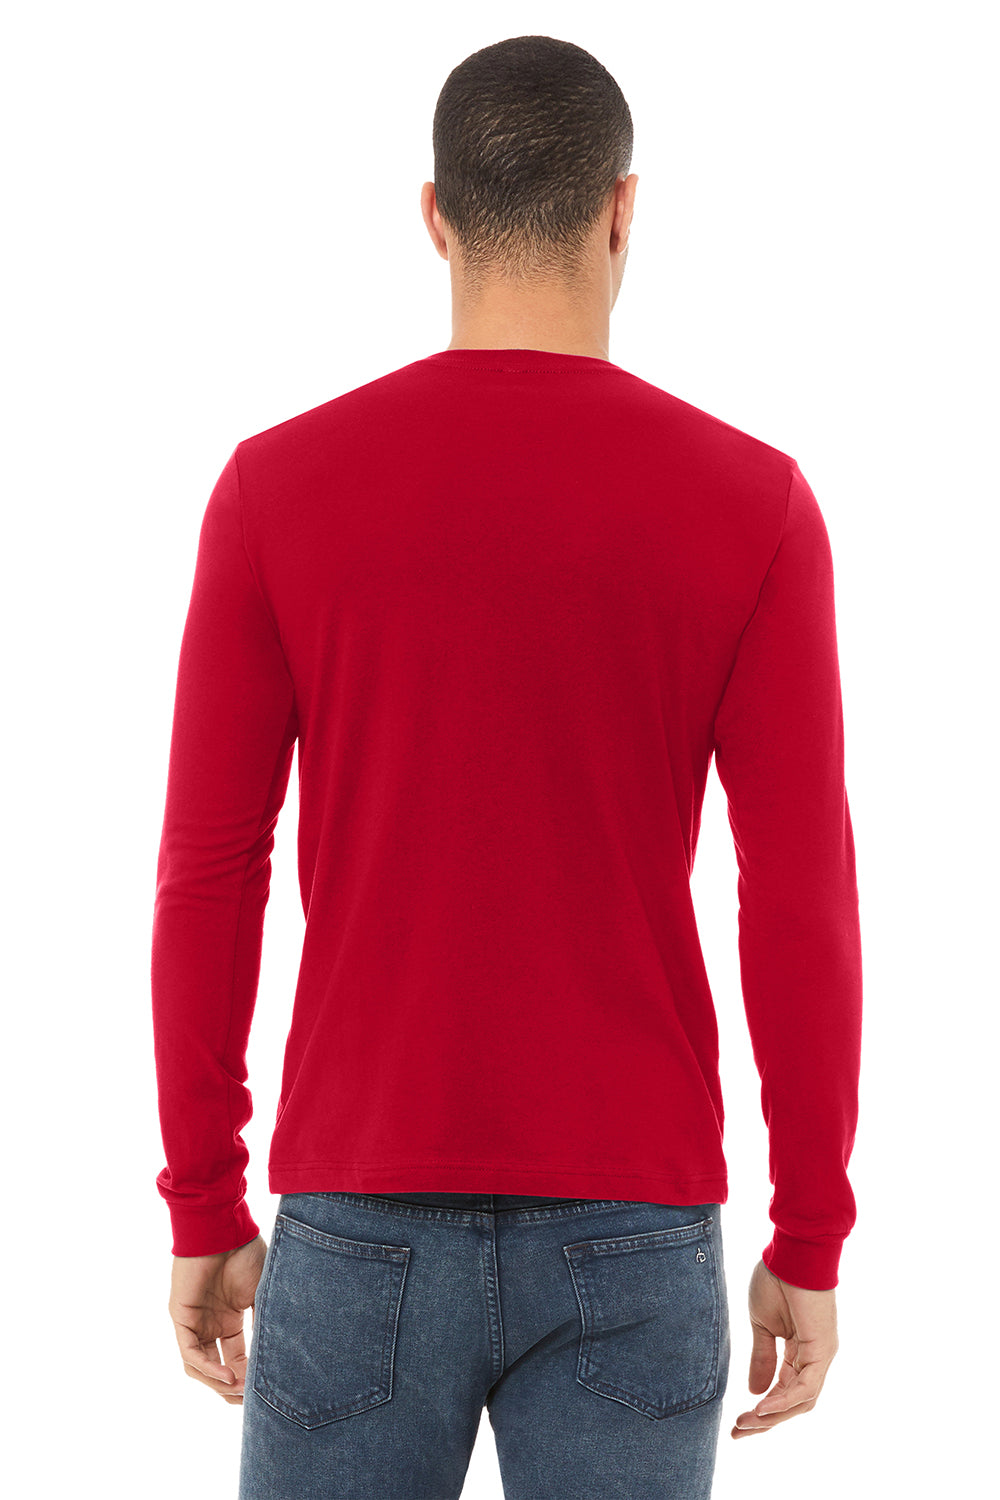 Bella + Canvas BC3501/3501 Mens Jersey Long Sleeve Crewneck T-Shirt Red Model Back